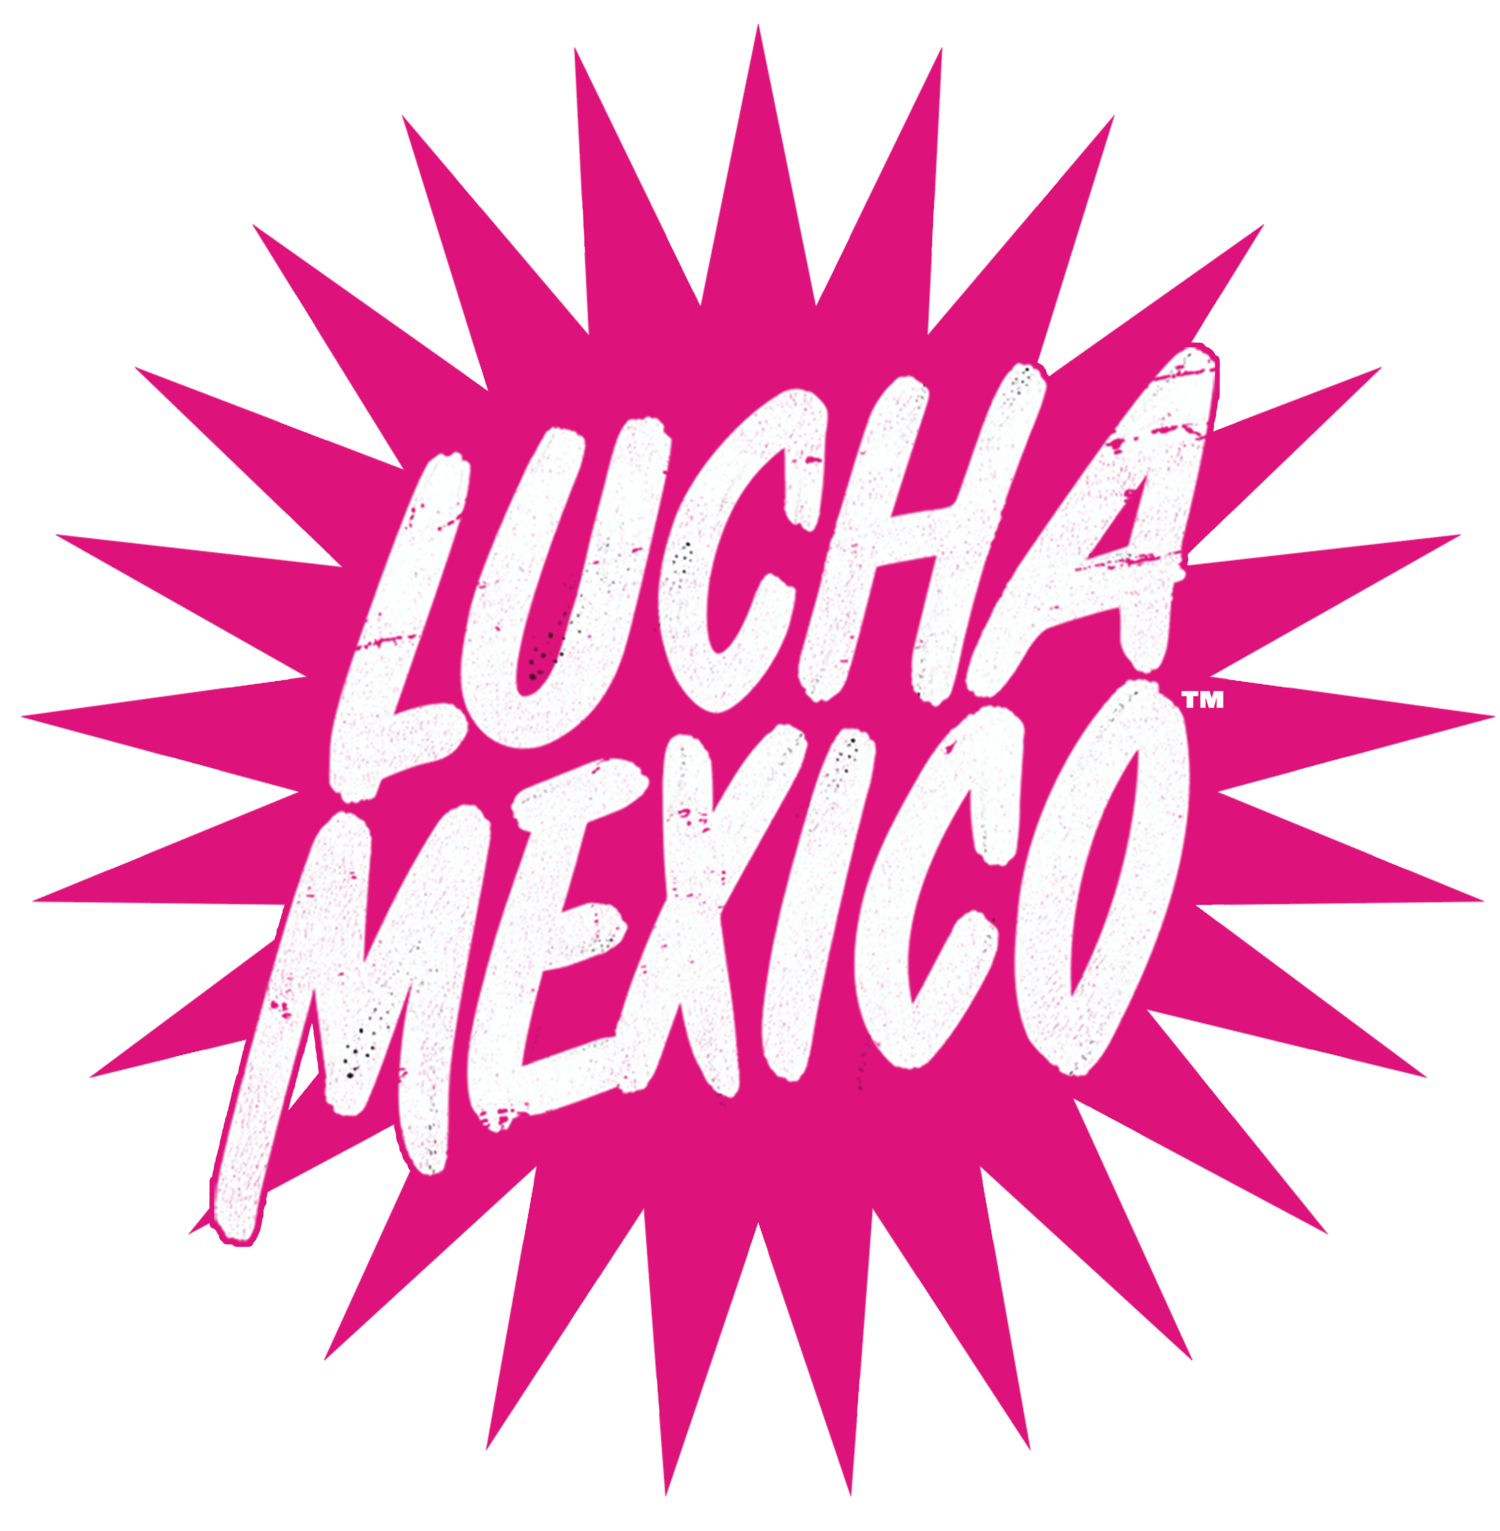 LUCHA MEXICO